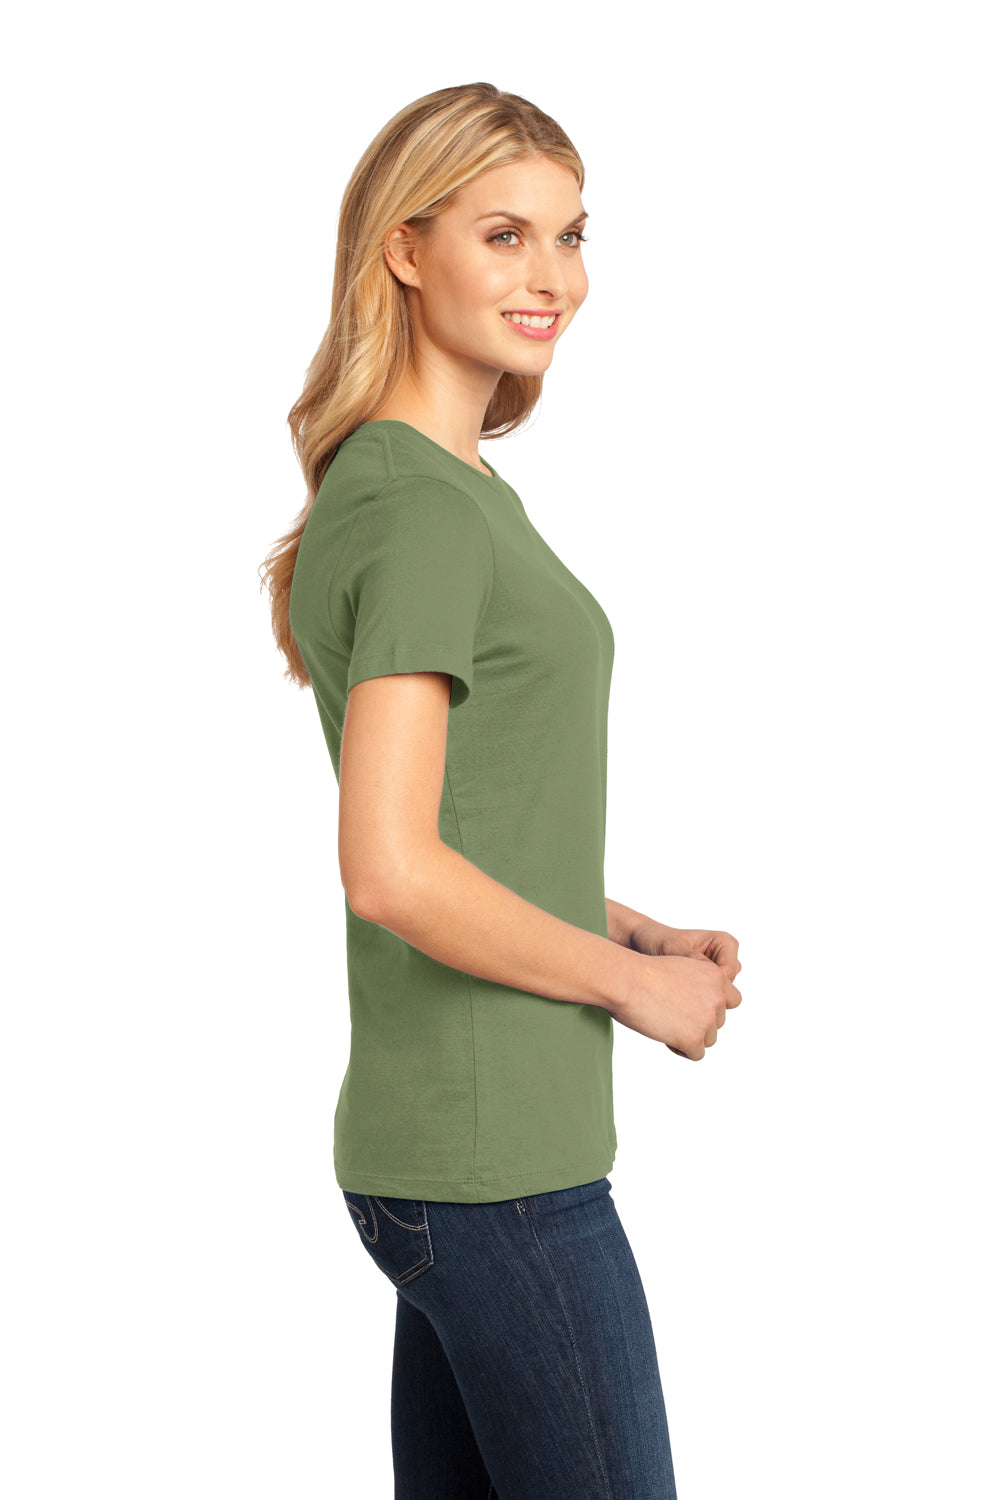 District DM104L Womens Perfect Weight Short Sleeve Crewneck T-Shirt Fatigue Green Side